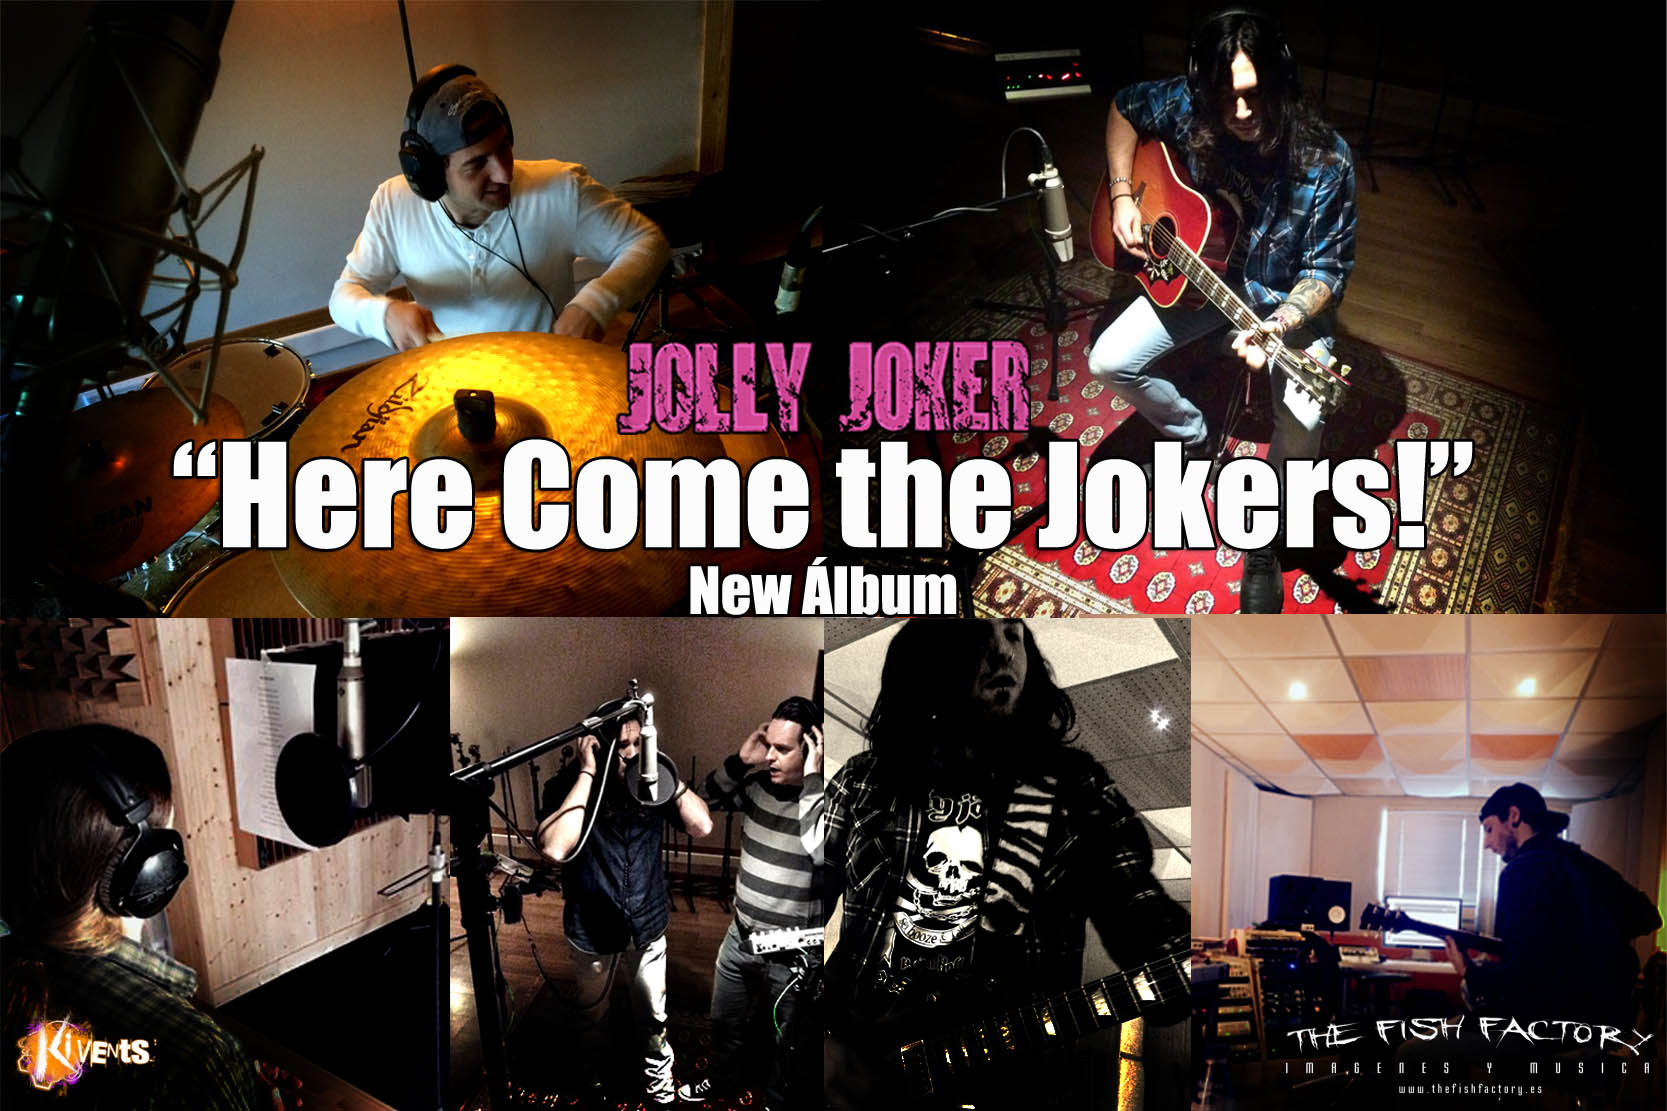 Jolly Joker - “Here Come the Jokers!”